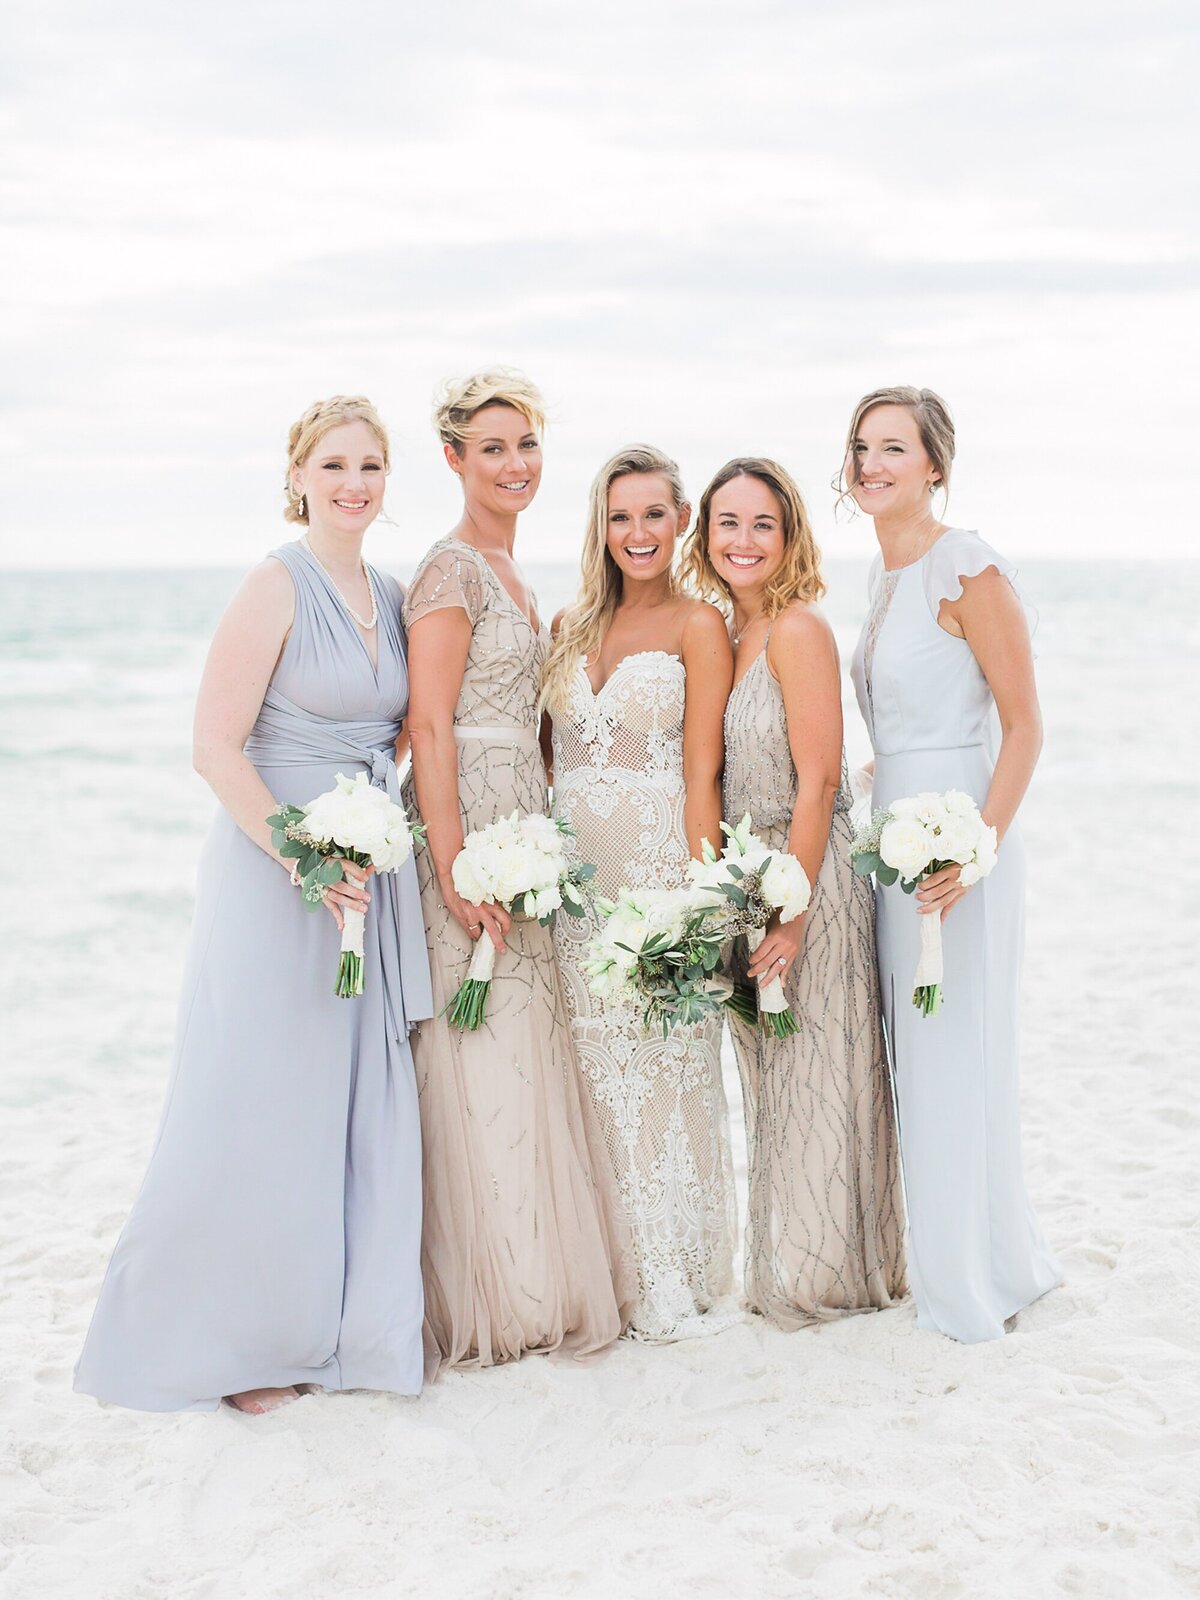 JessieBarksdalePhotography_Alys-and-Rosemary-Beach-Wedding-Photographer_026